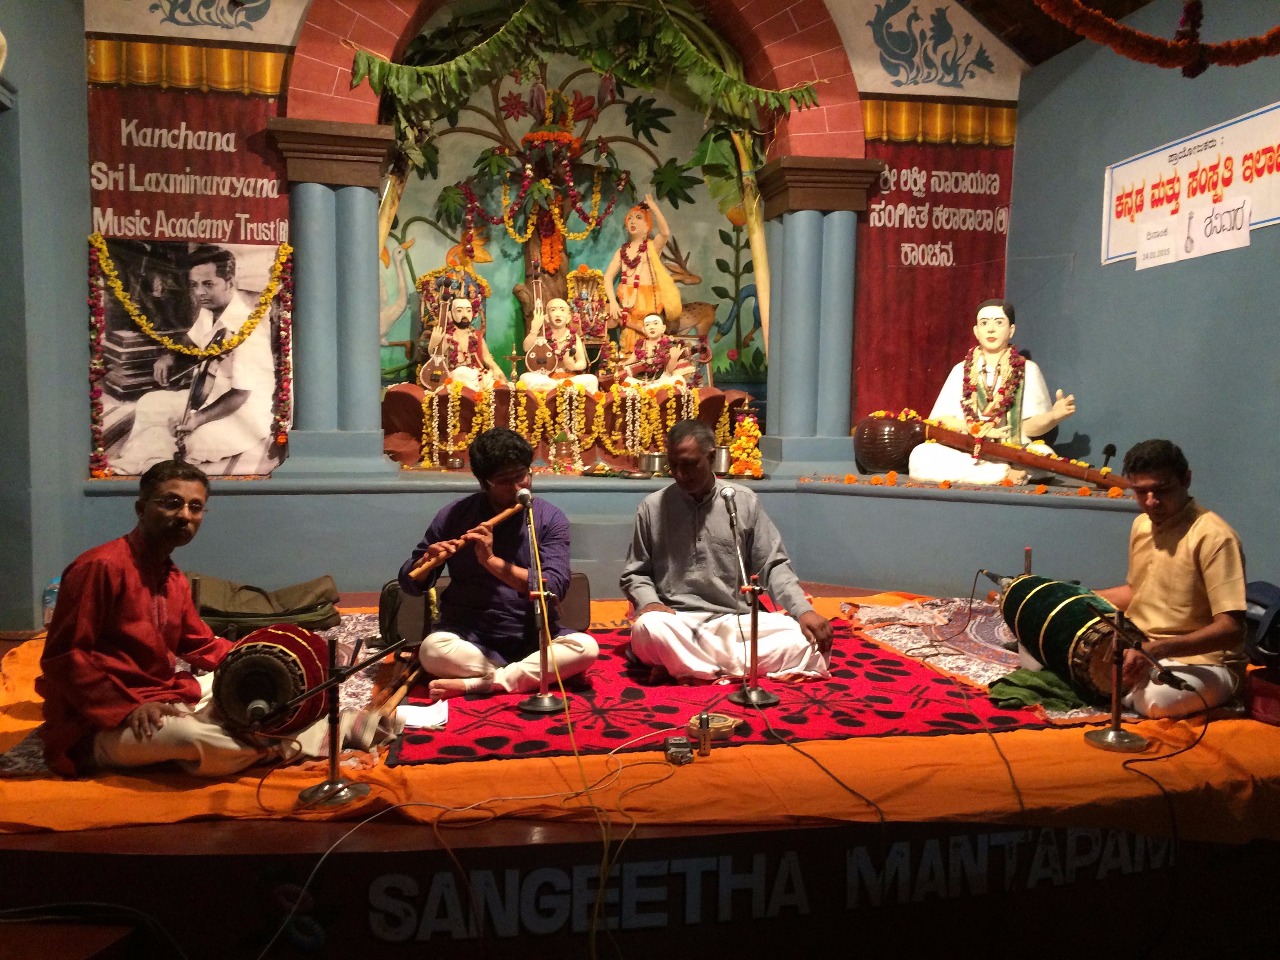 Kanchnothsava -2015 , Amith Nadig - Flute, Hemmige prashanth - Vocal, B R shreenivas and Anirudha bhat - Mridangam